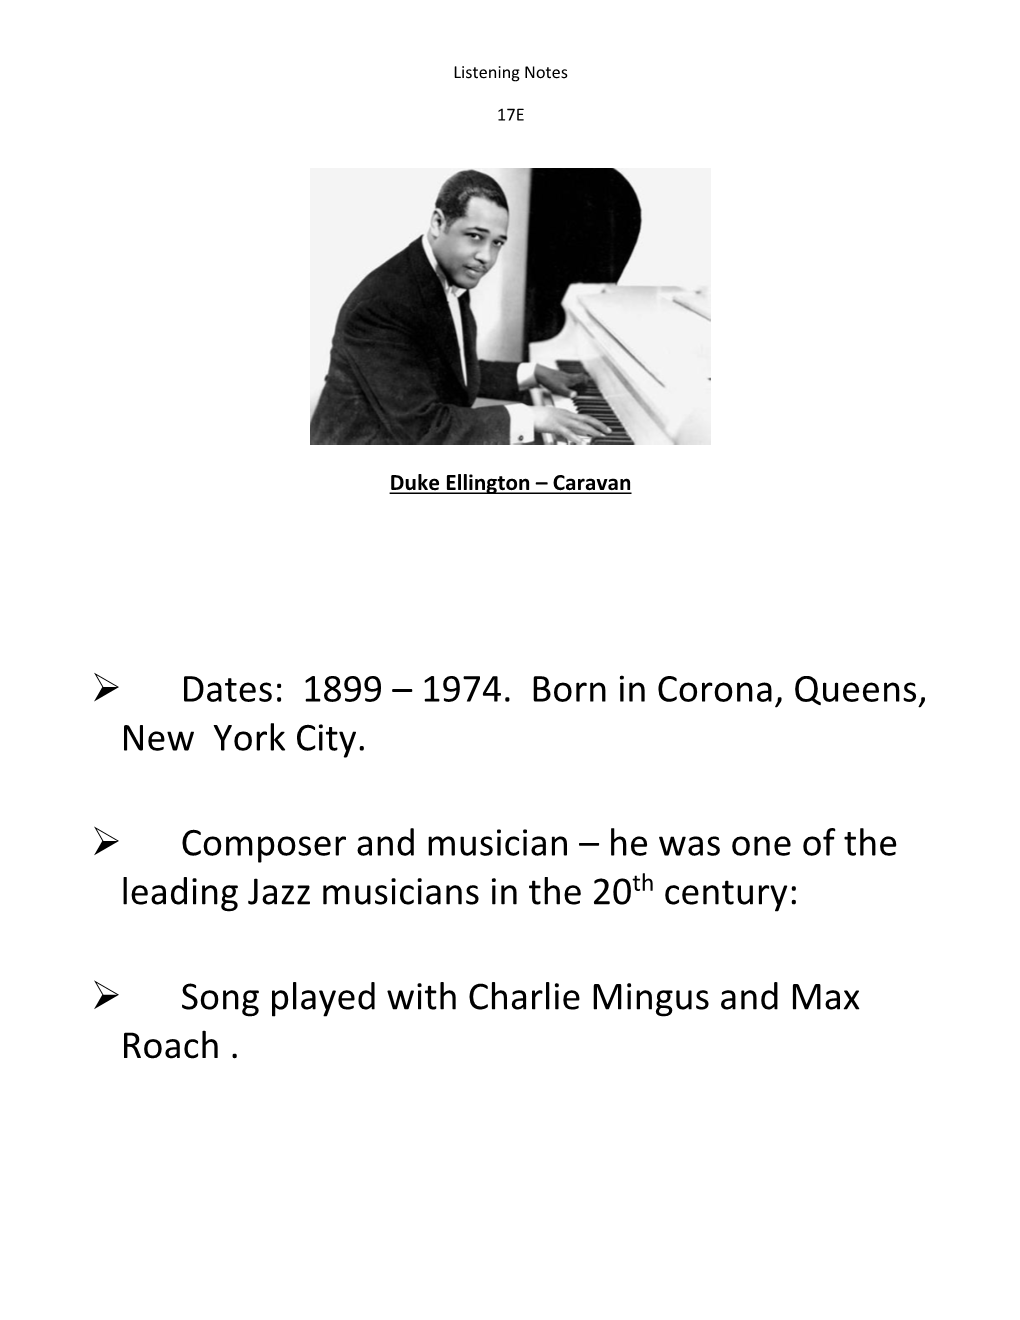 1899 – 1974. Born in Corona, Queens, New York City. Composer